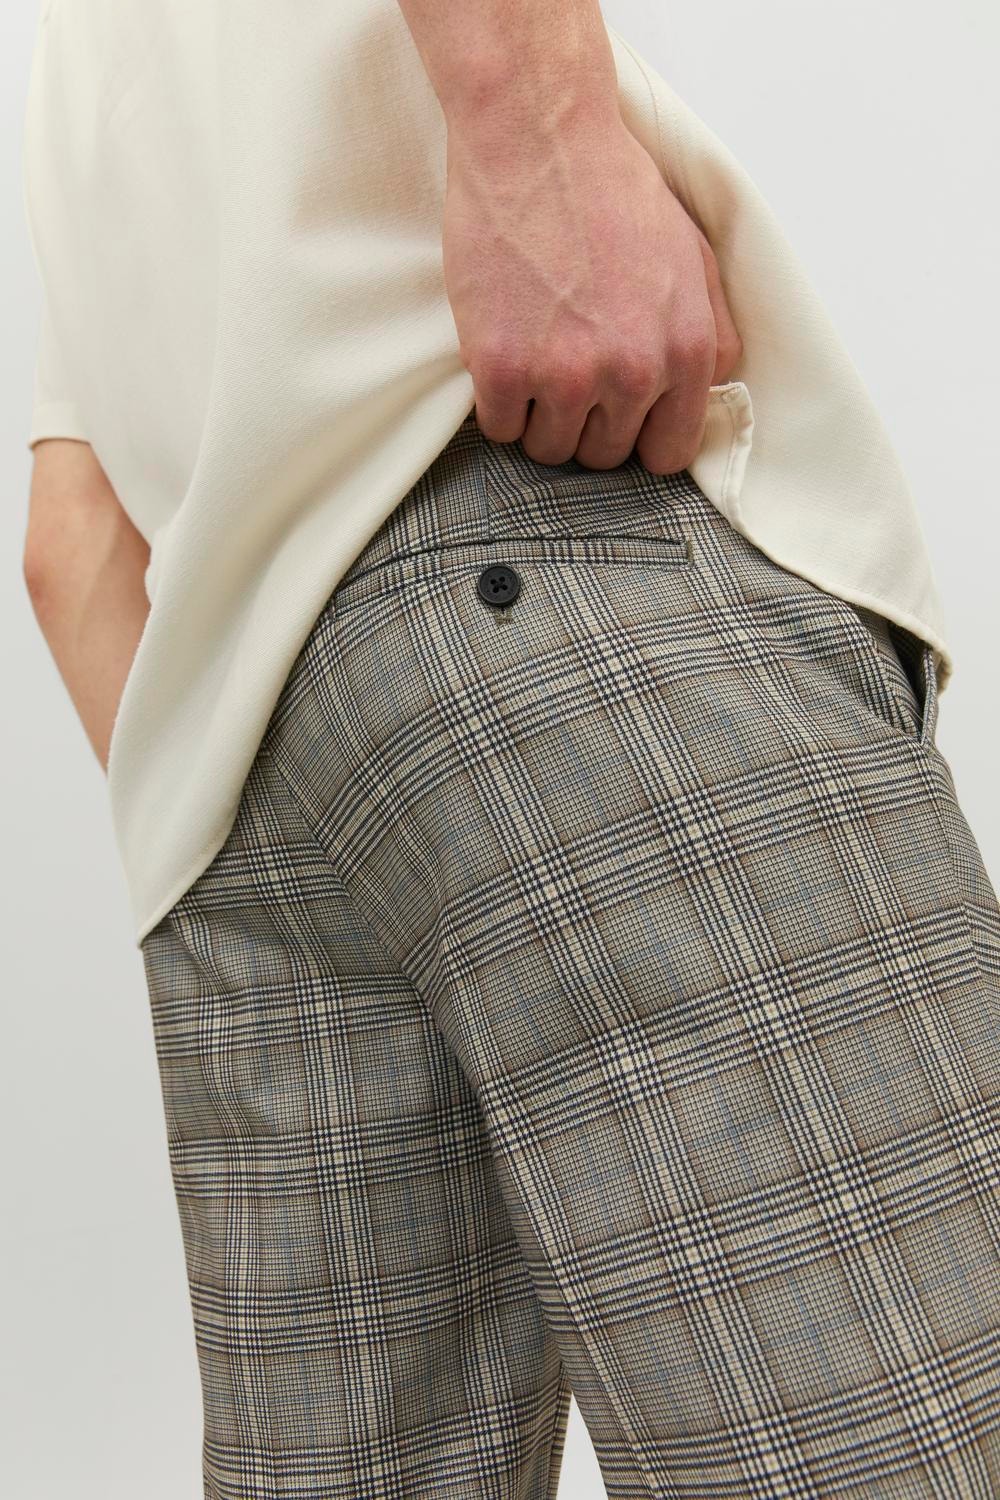 Jack & Jones Pantalones chinos Slim Fit -Oxford Tan - 12173623